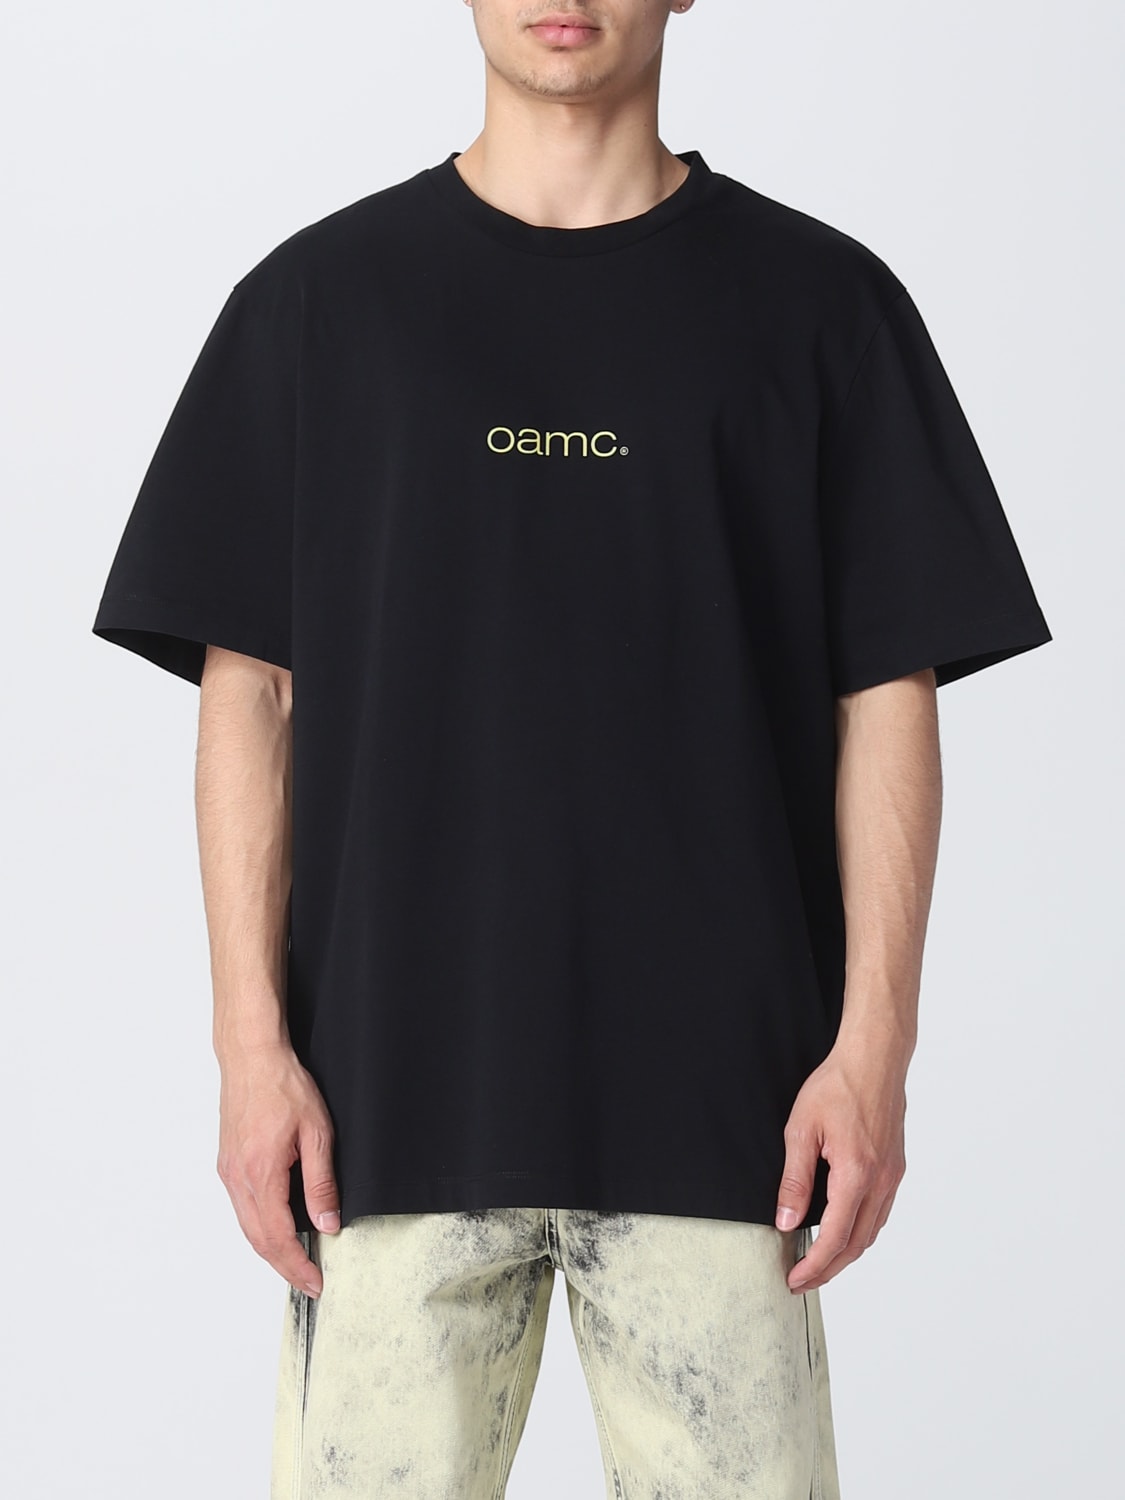 oamc アロハシャツ シャツ S-